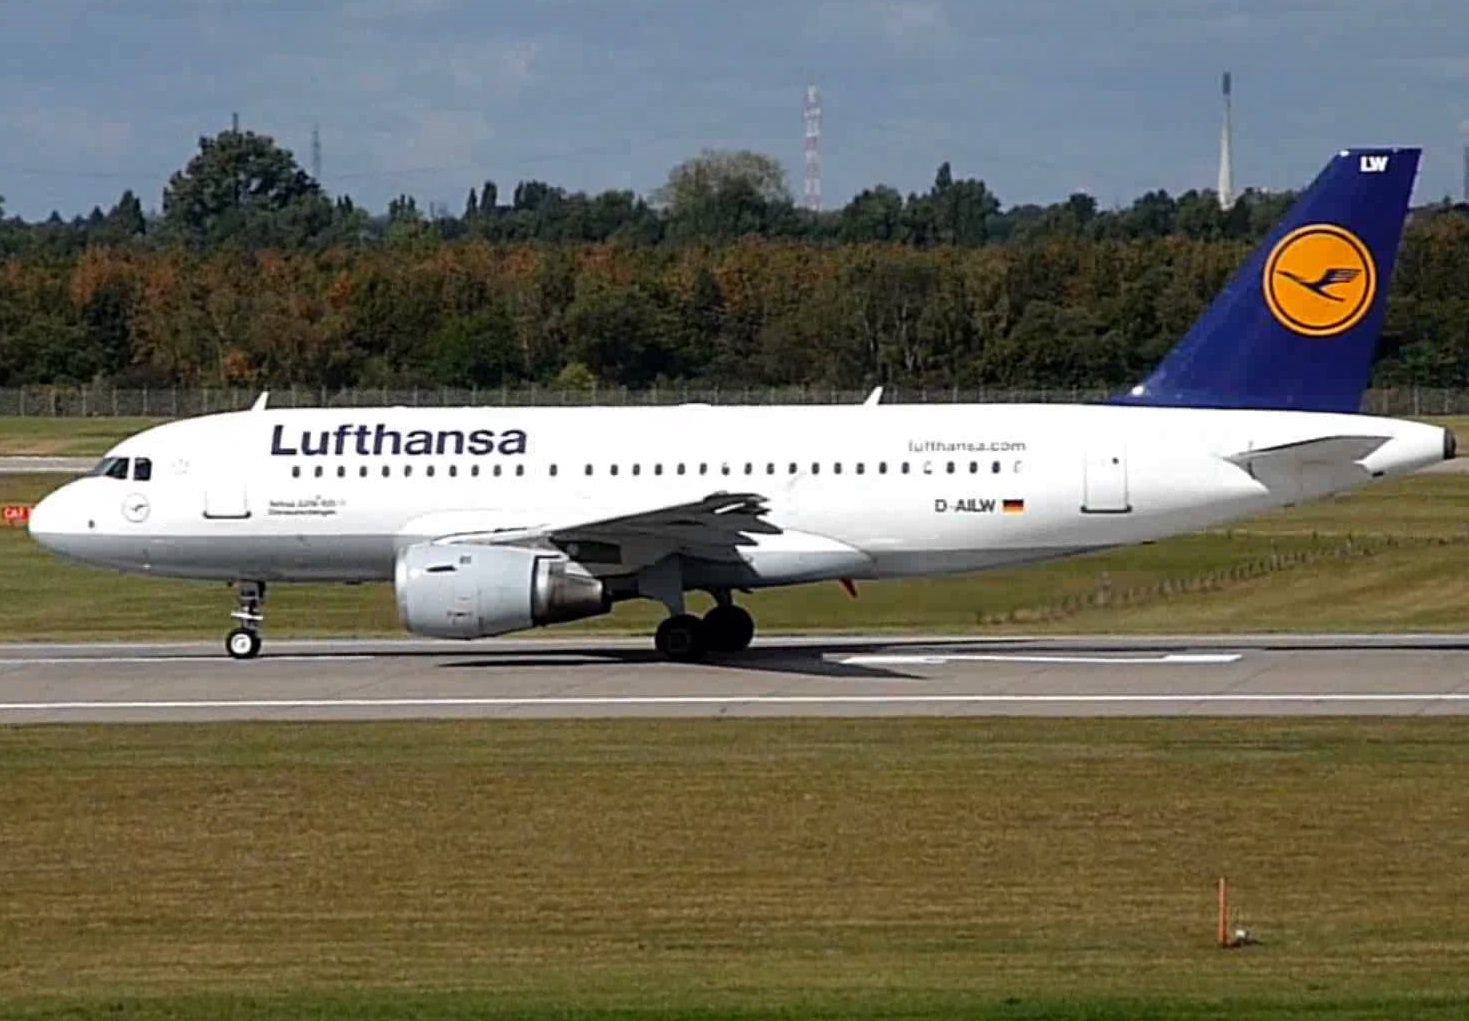 Prvi let Lufthanse iz Minhena za Tivat 13. aprila